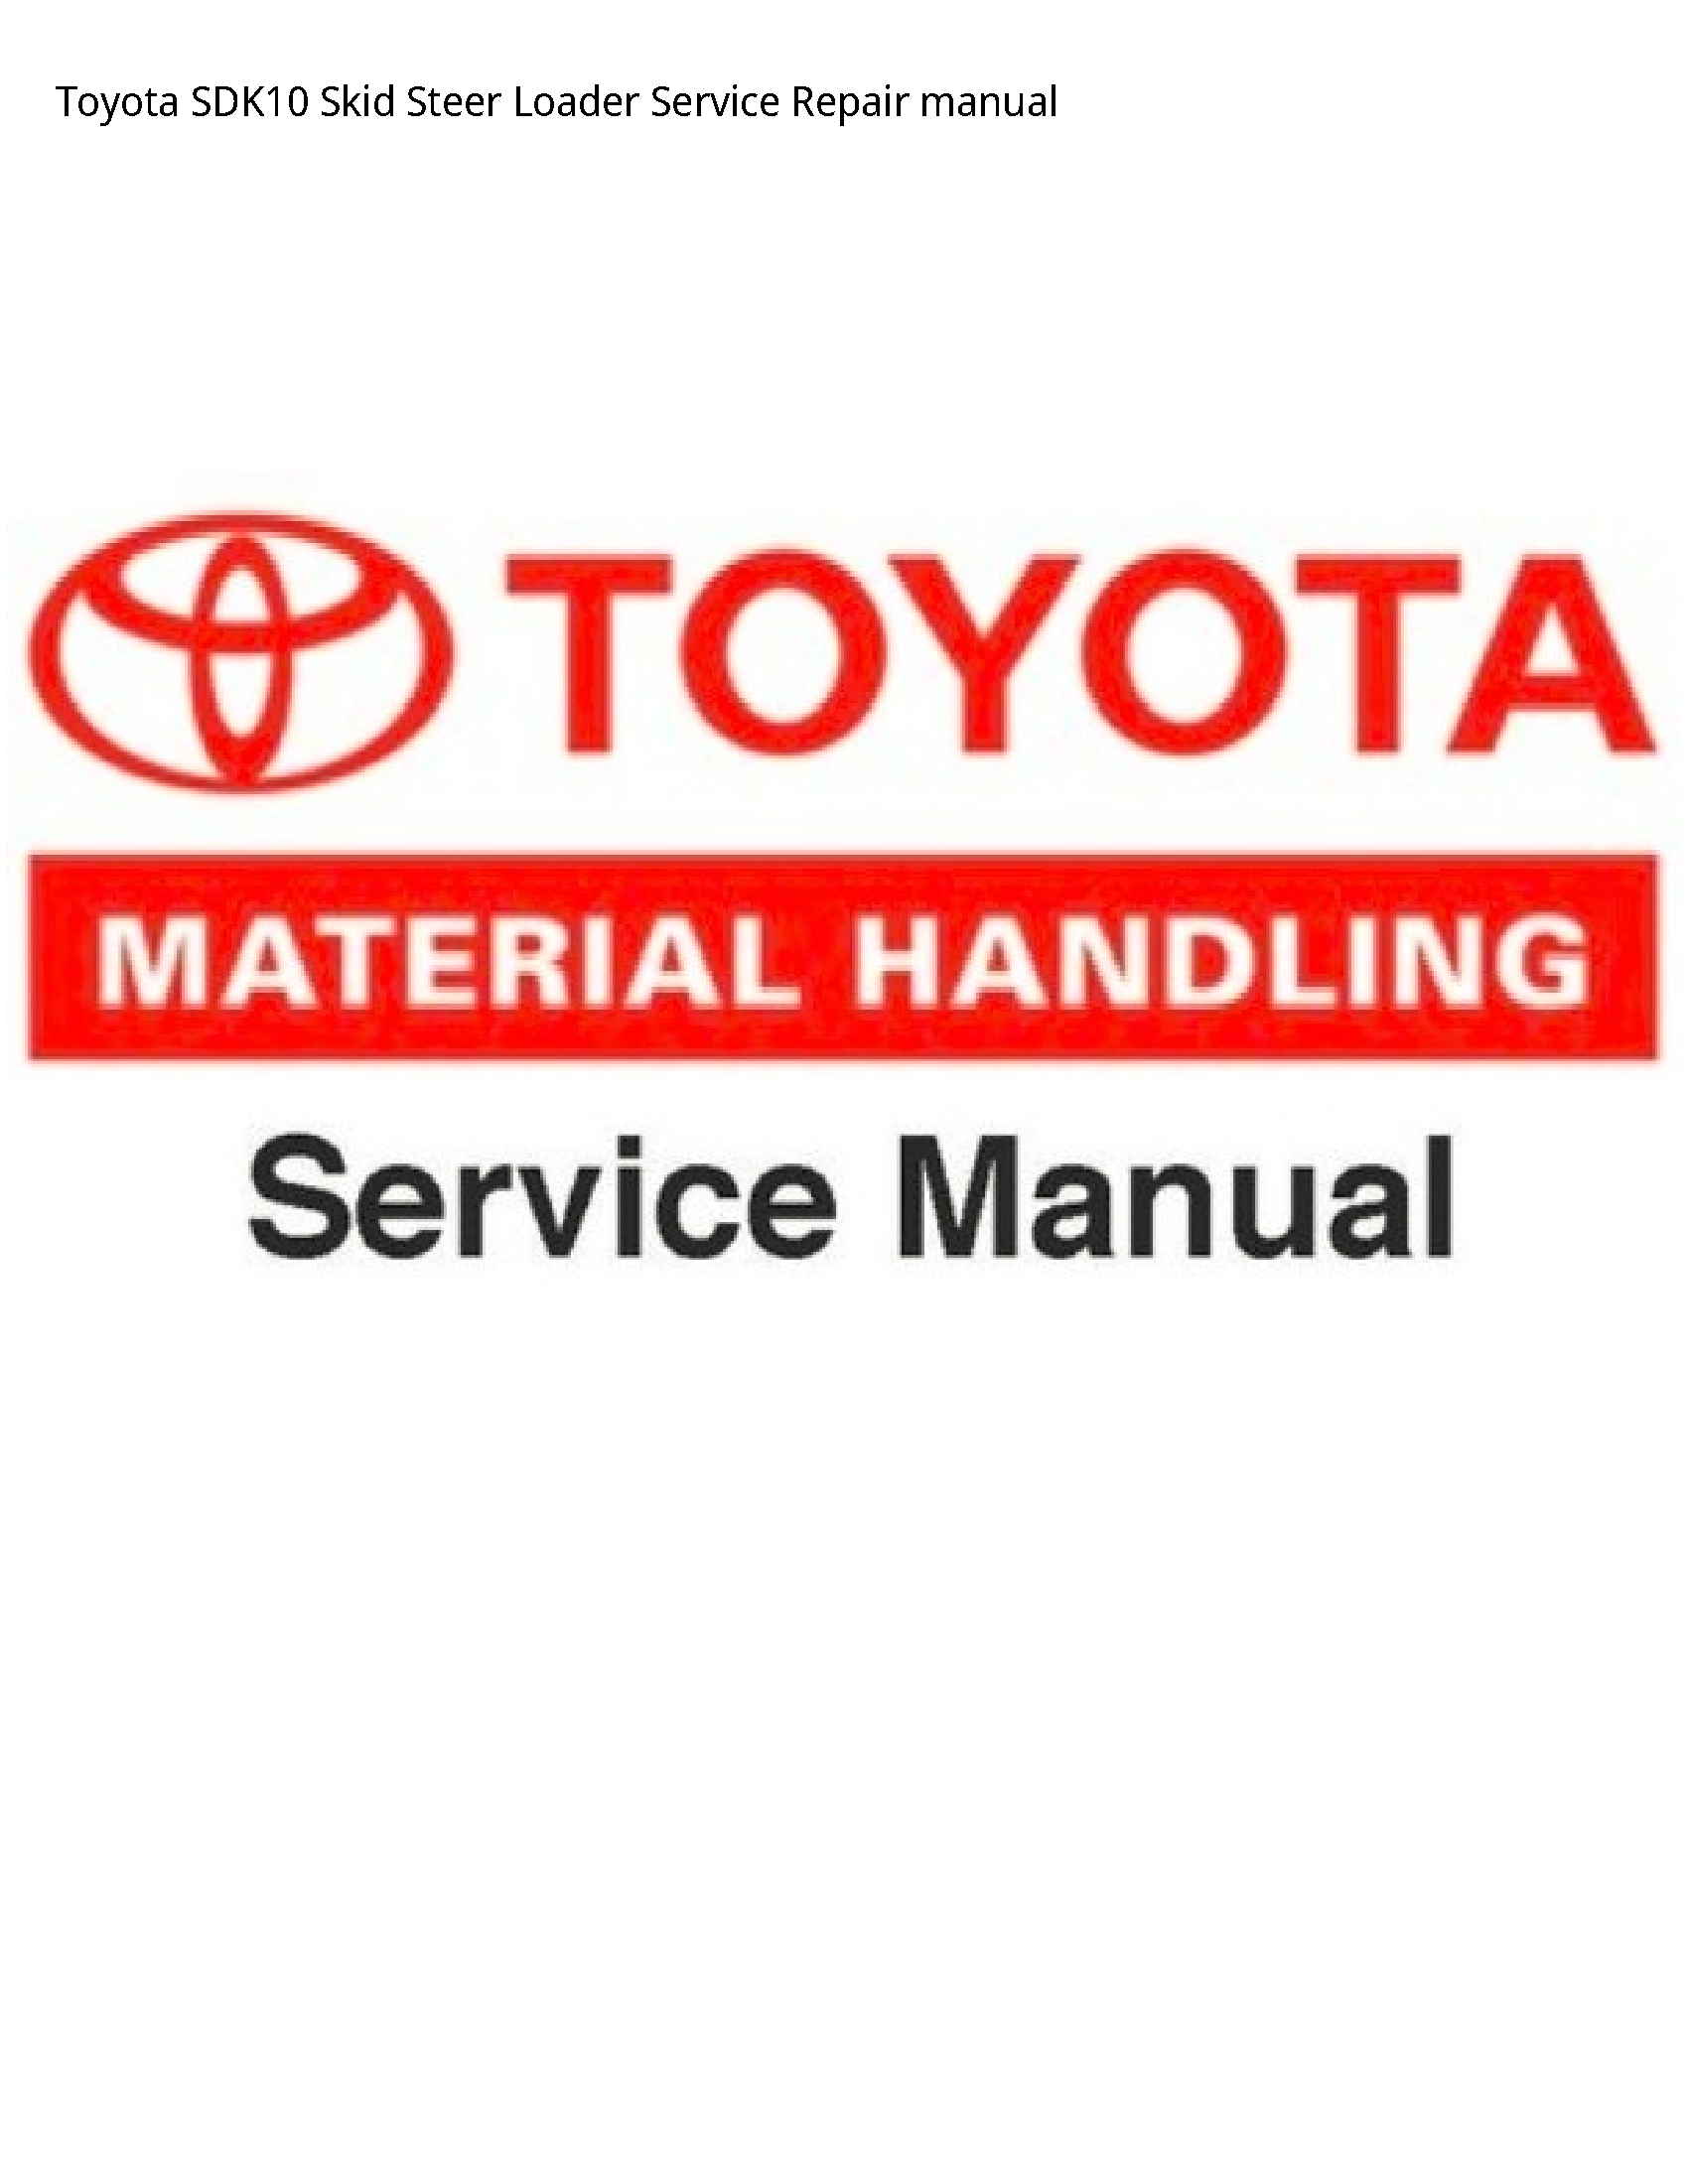 Toyota SDK10 Skid Steer Loader manual